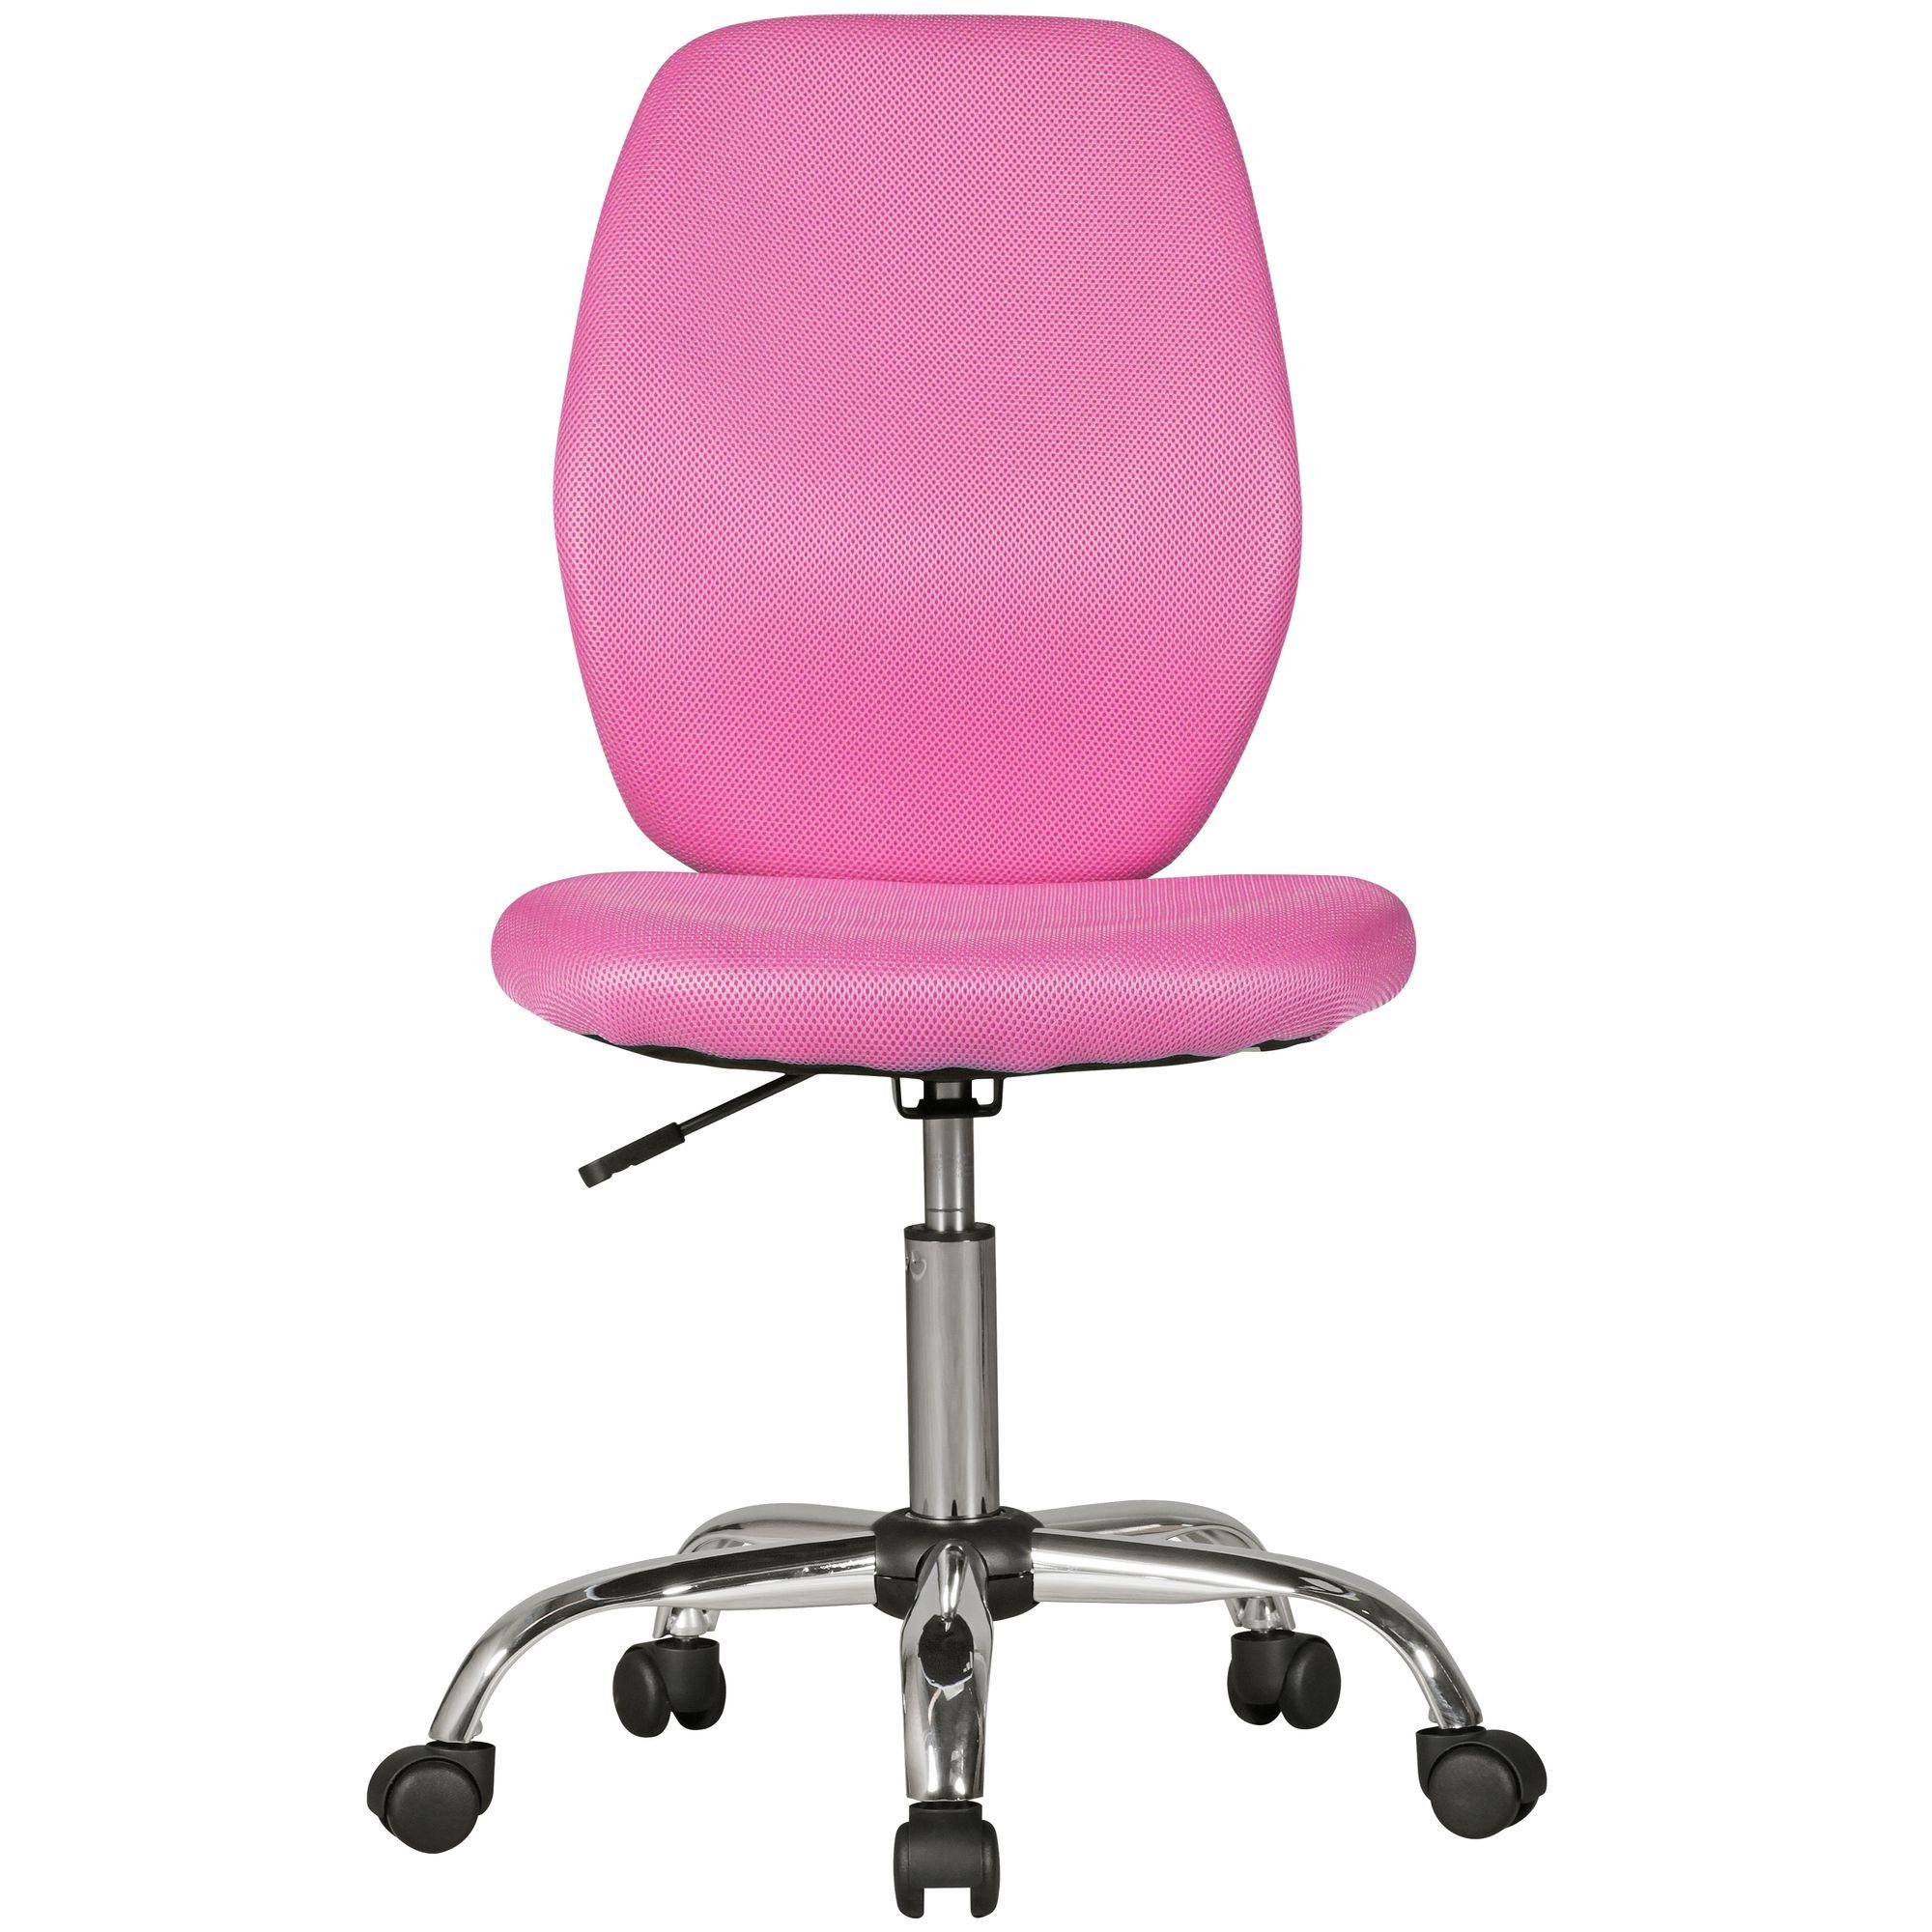 Kinderstuhl Sitzhöhe, KADIMA einstellbare Kinderdrehstuhl, hohe DESIGN Pink Rückenlehne